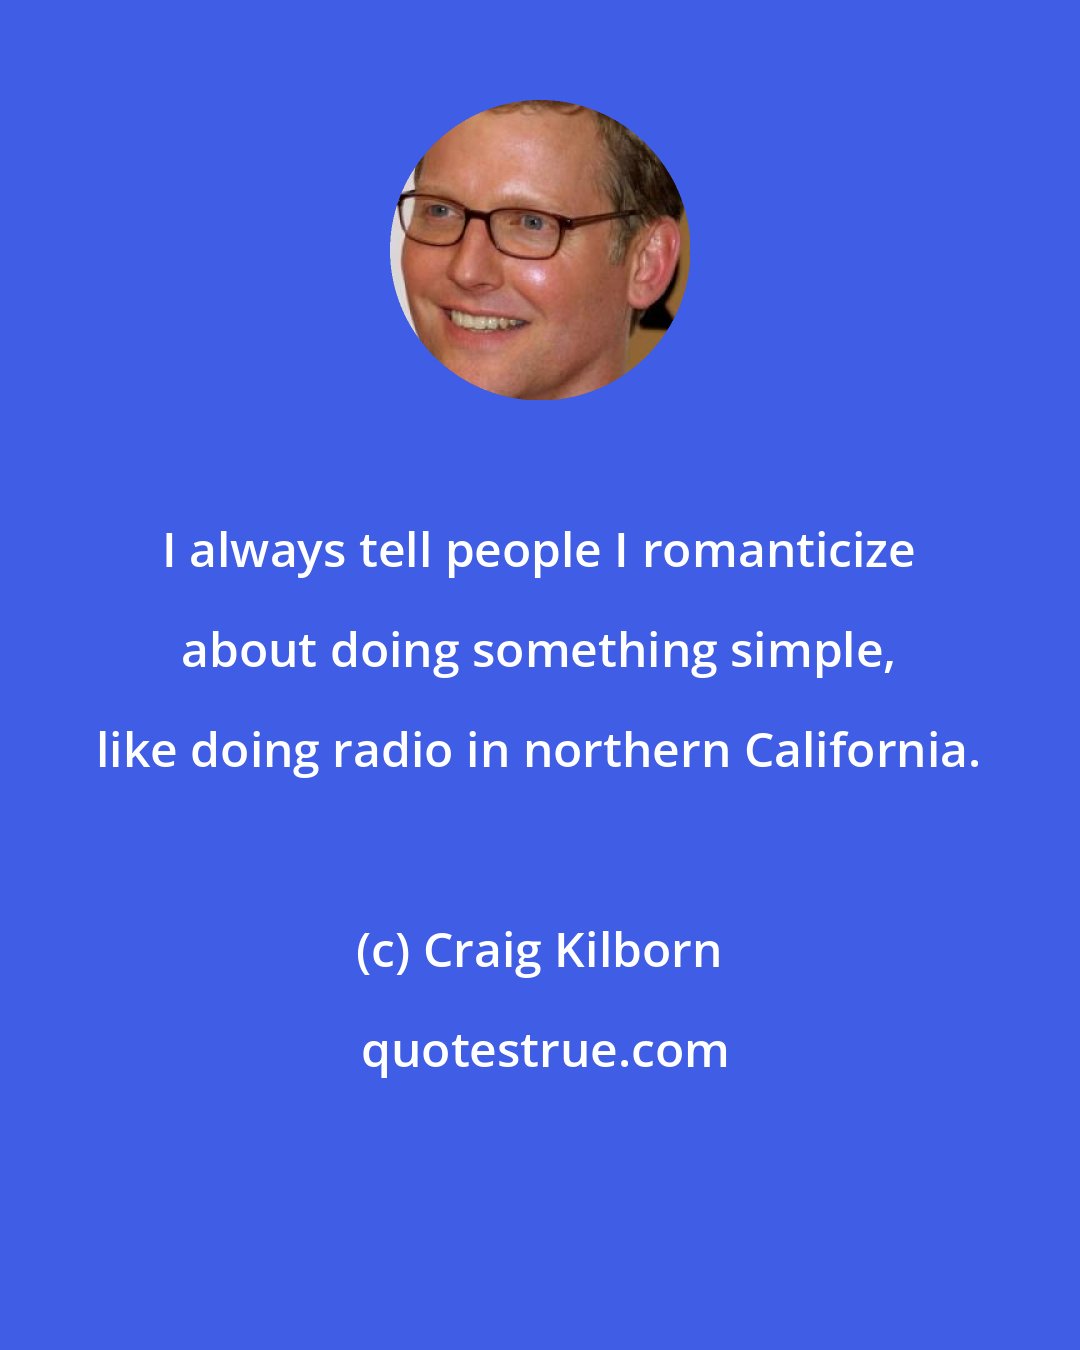 Craig Kilborn: I always tell people I romanticize about doing something simple, like doing radio in northern California.